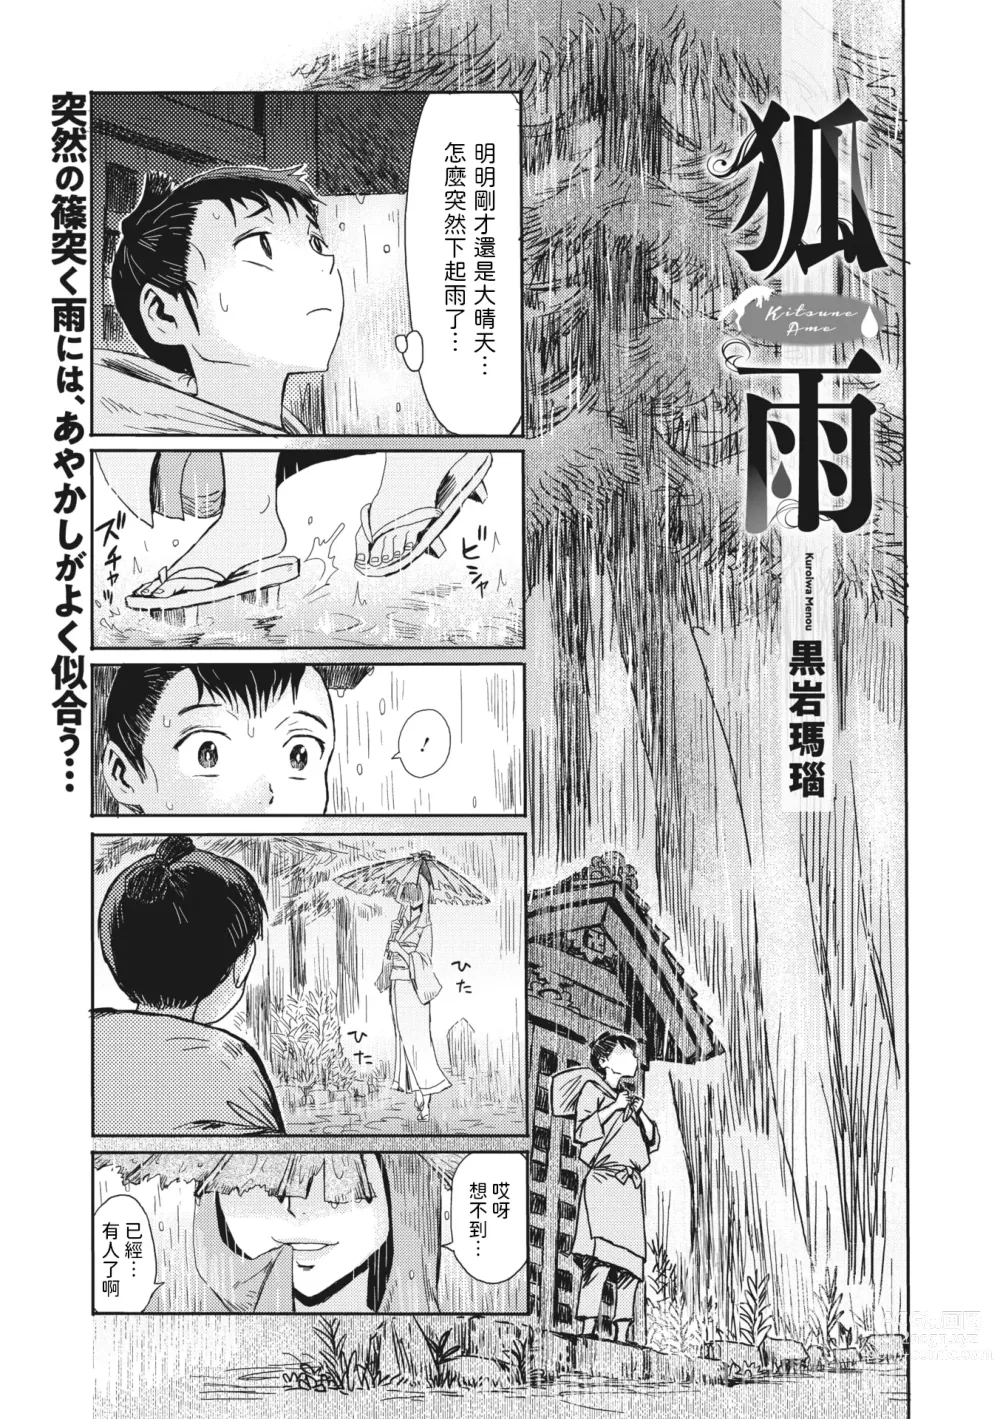 Page 1 of manga Kitsune Ame